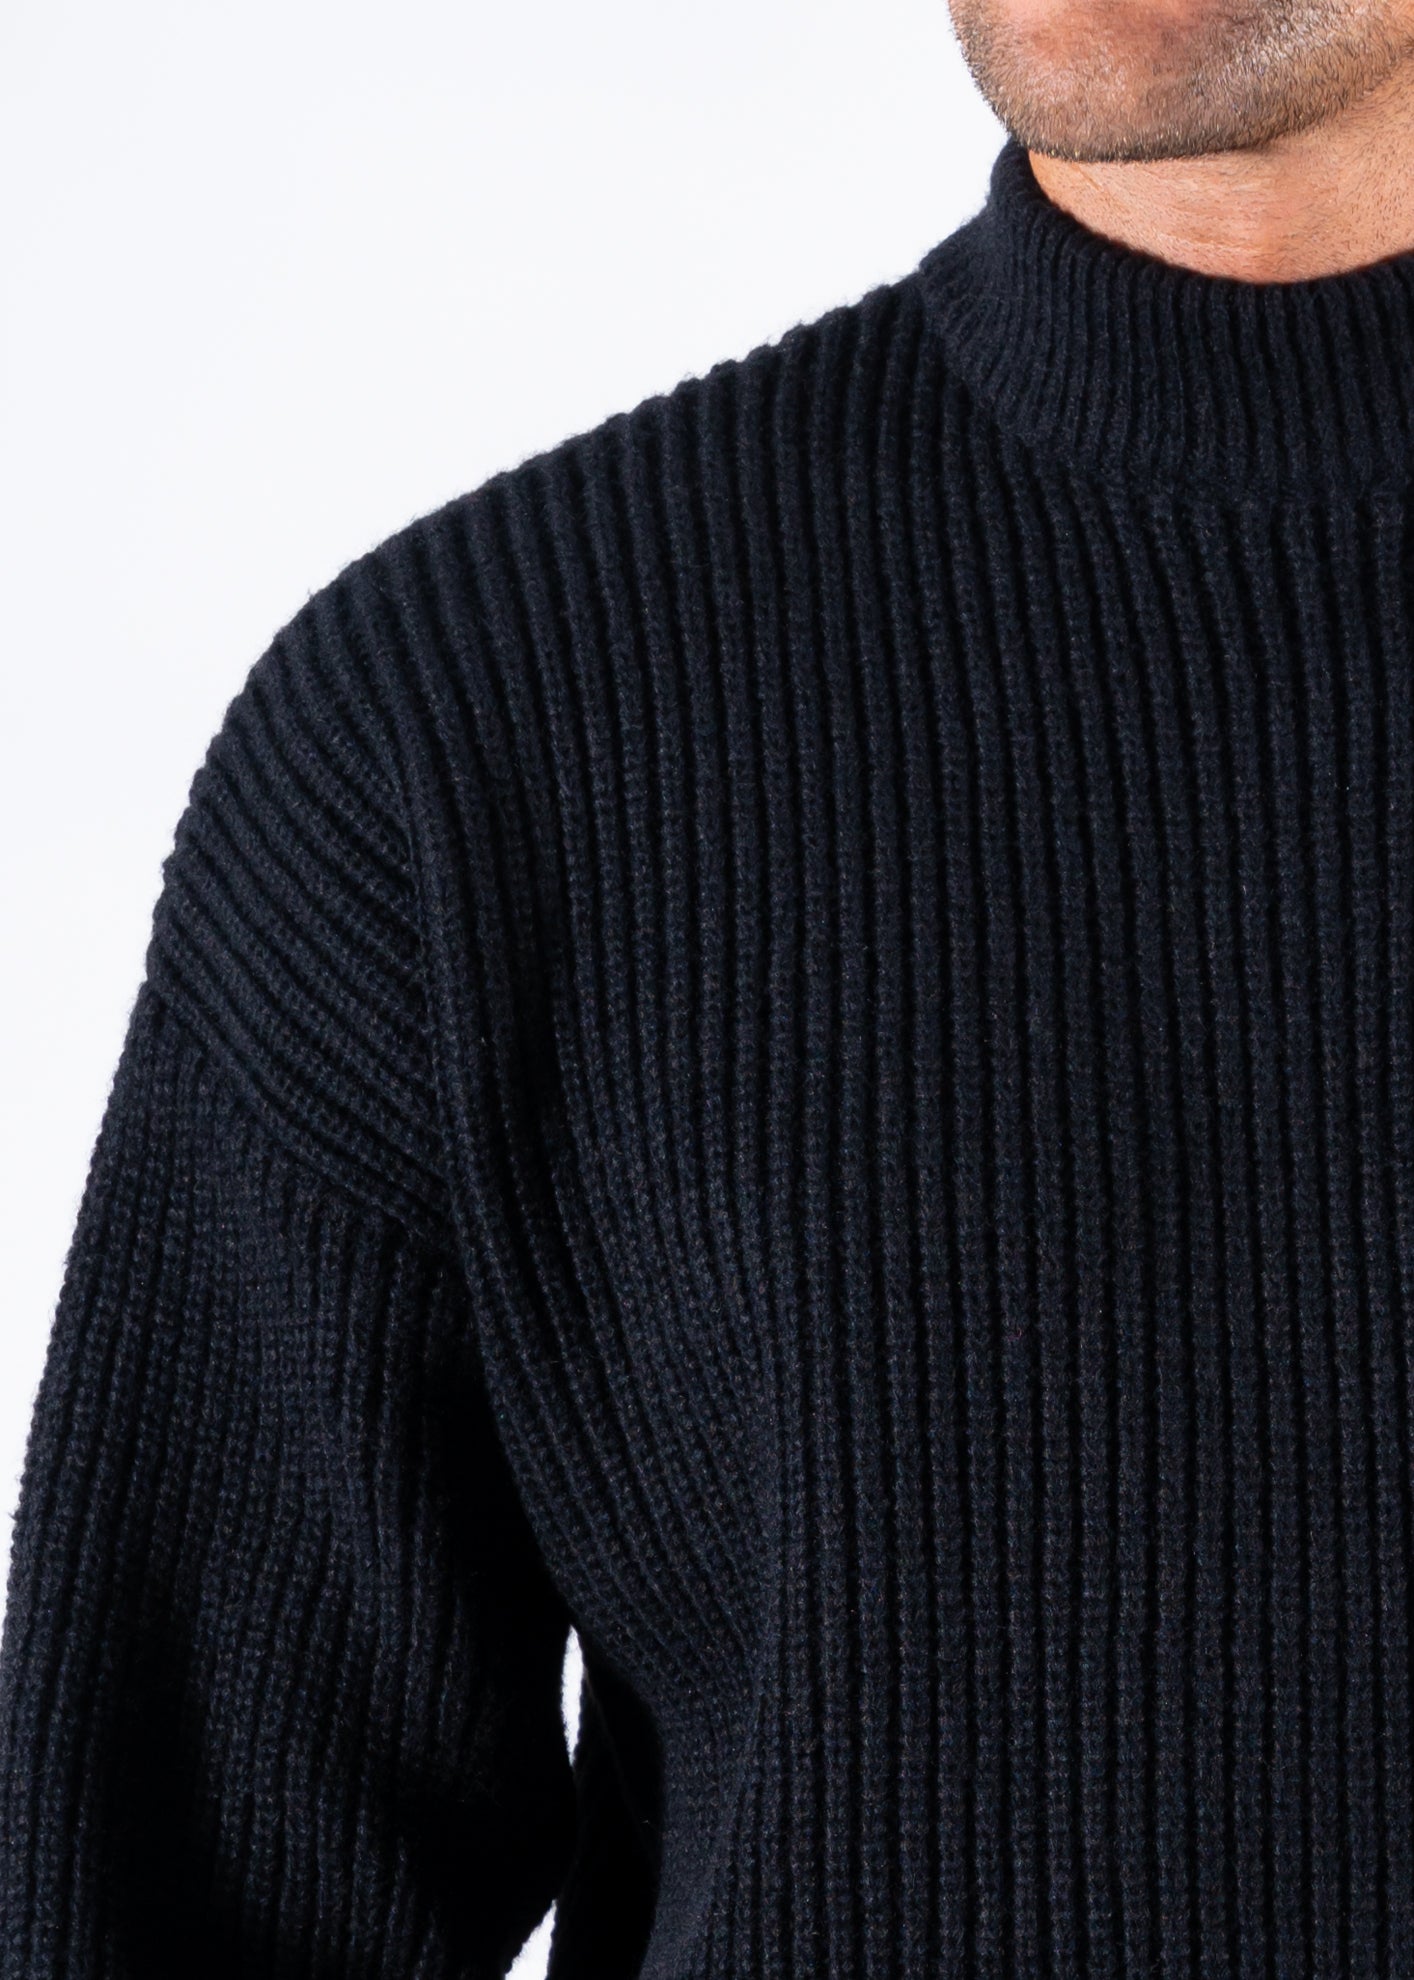 Sweater turtleneck knitted black oversized